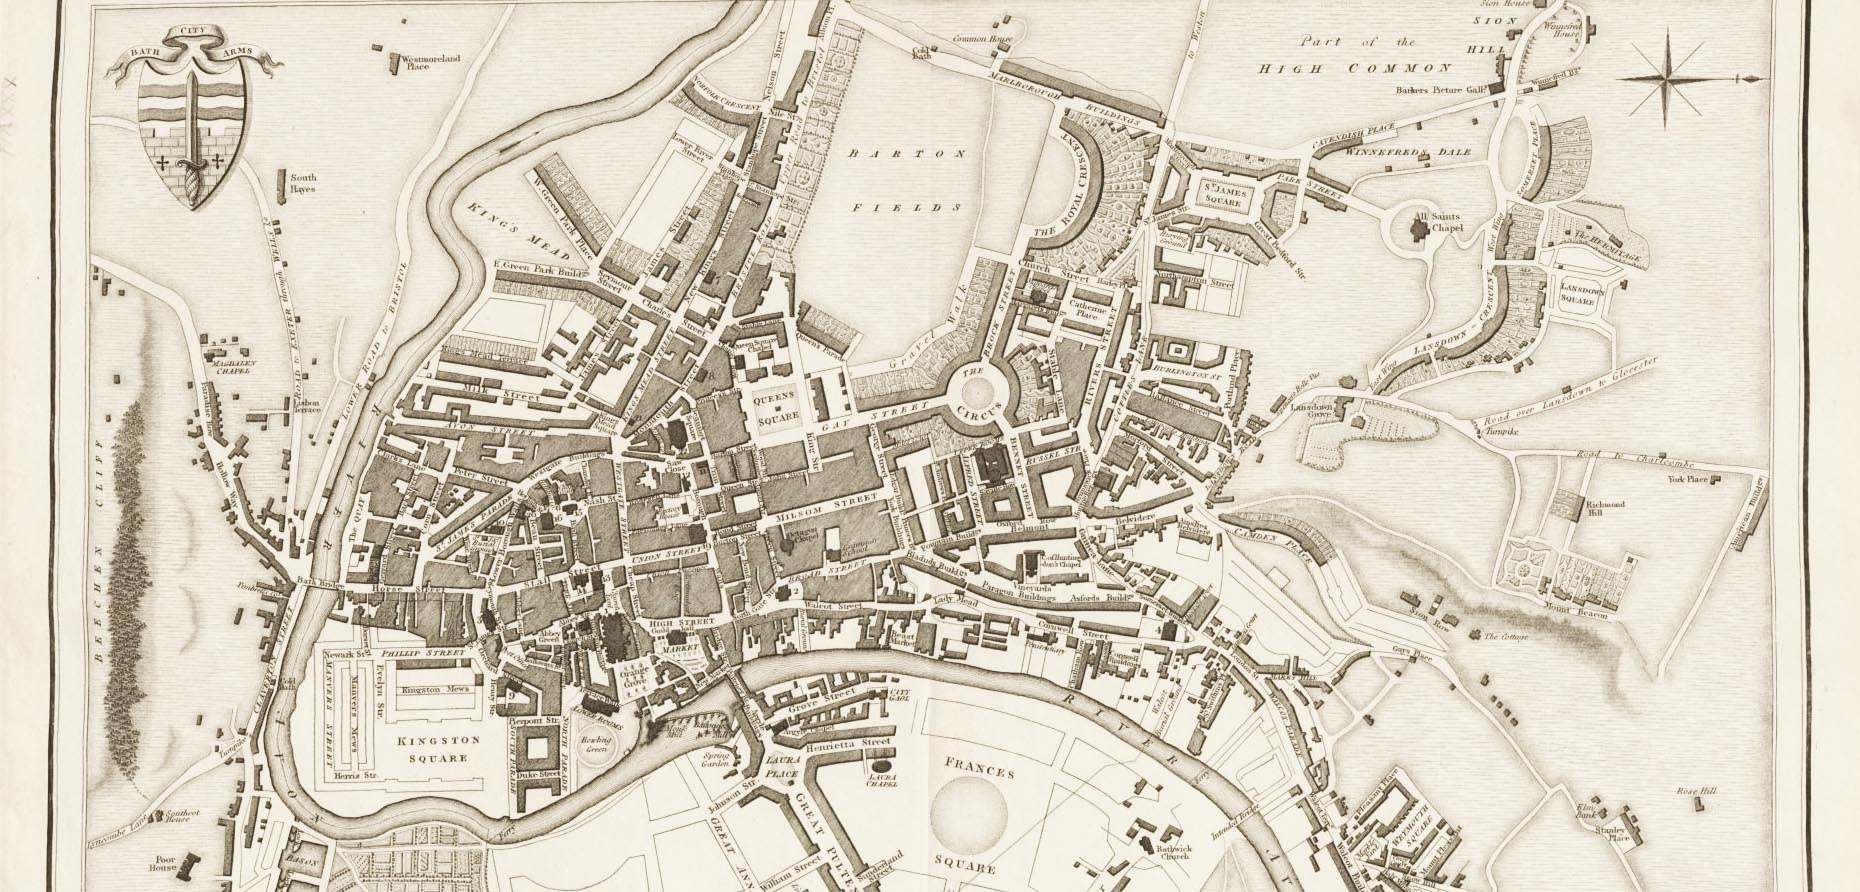 History of Prospect Place, Bath